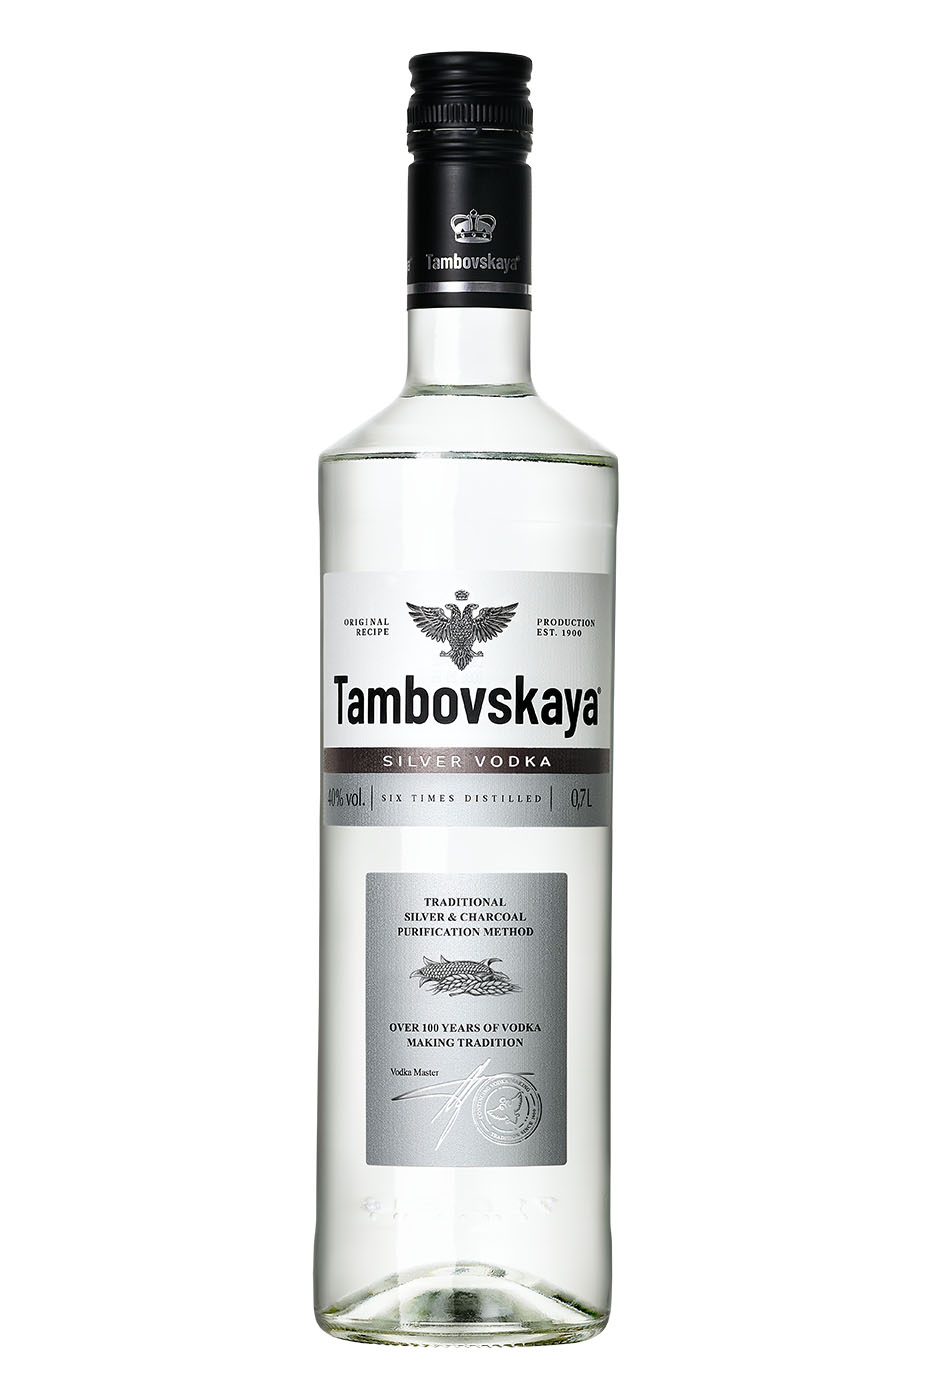 Amber Beverage Germany: Marktstart des Tambovskaya Vodkas in ...